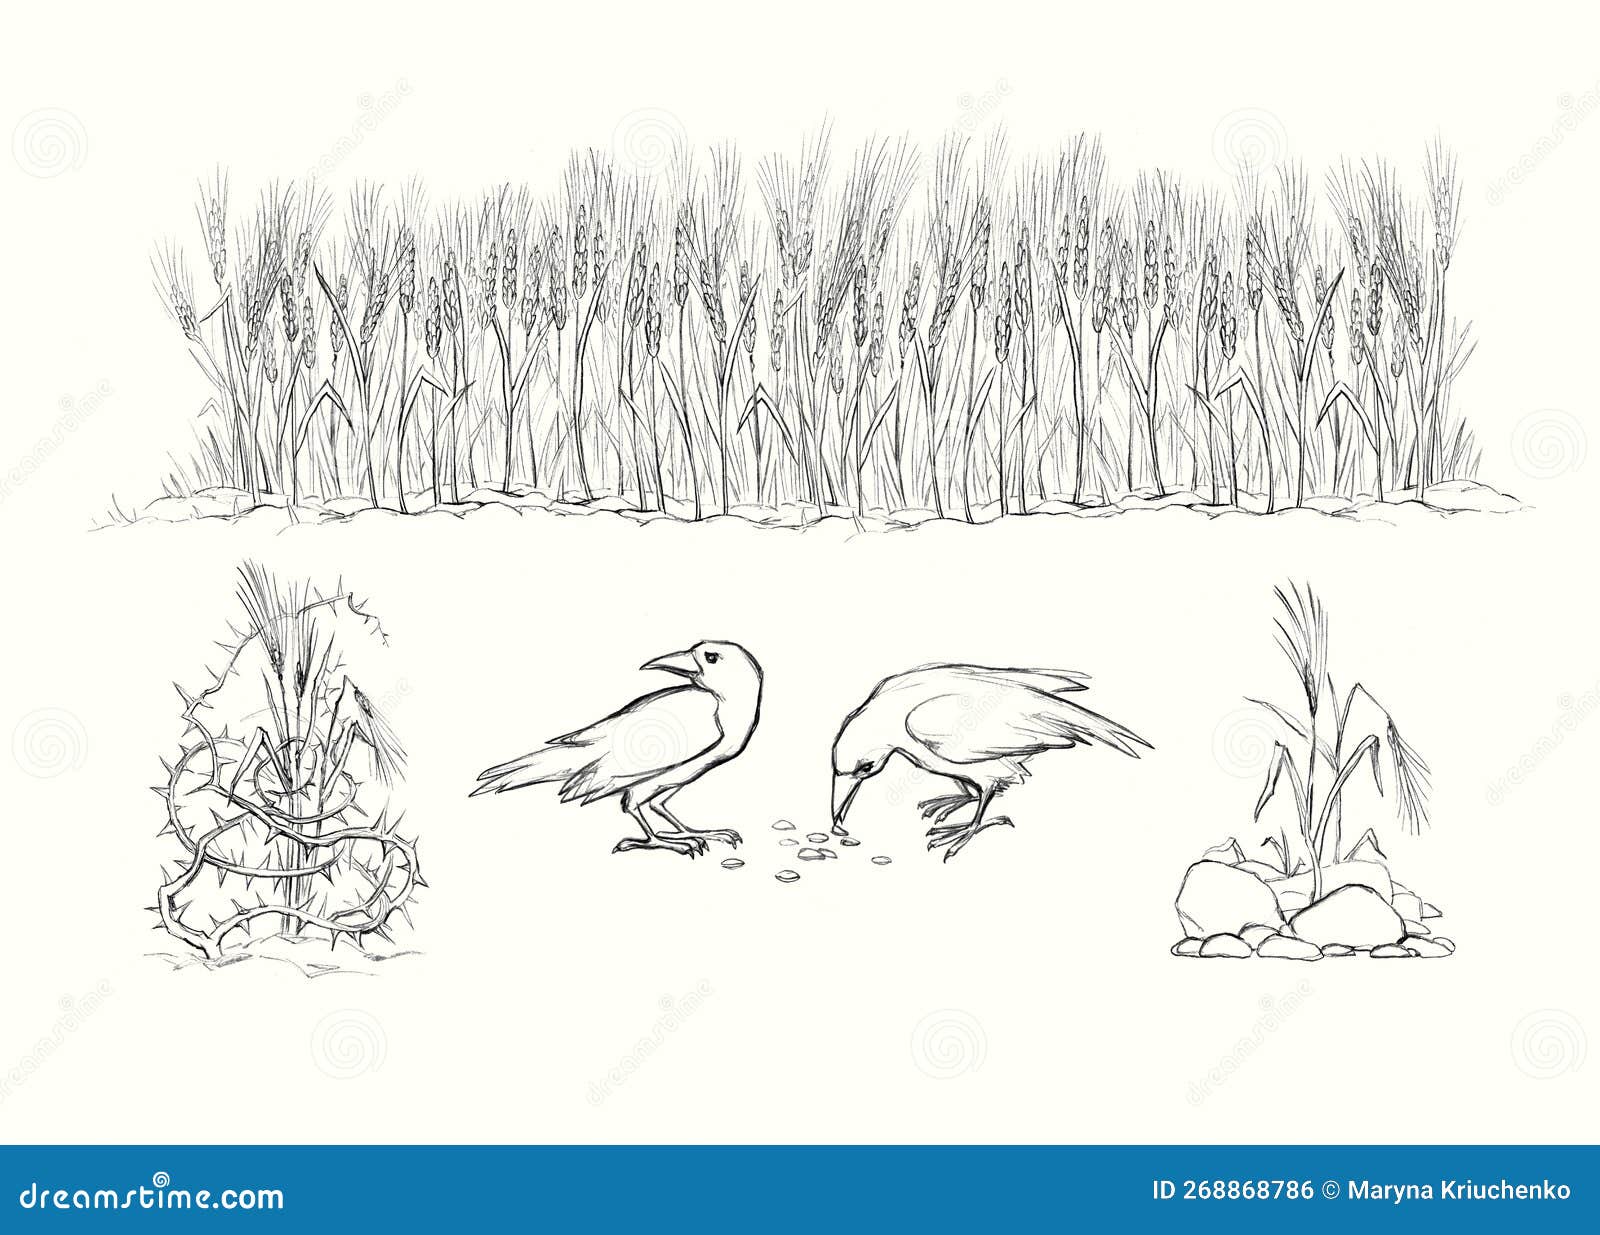 pencil drawing. field of ripe wheat